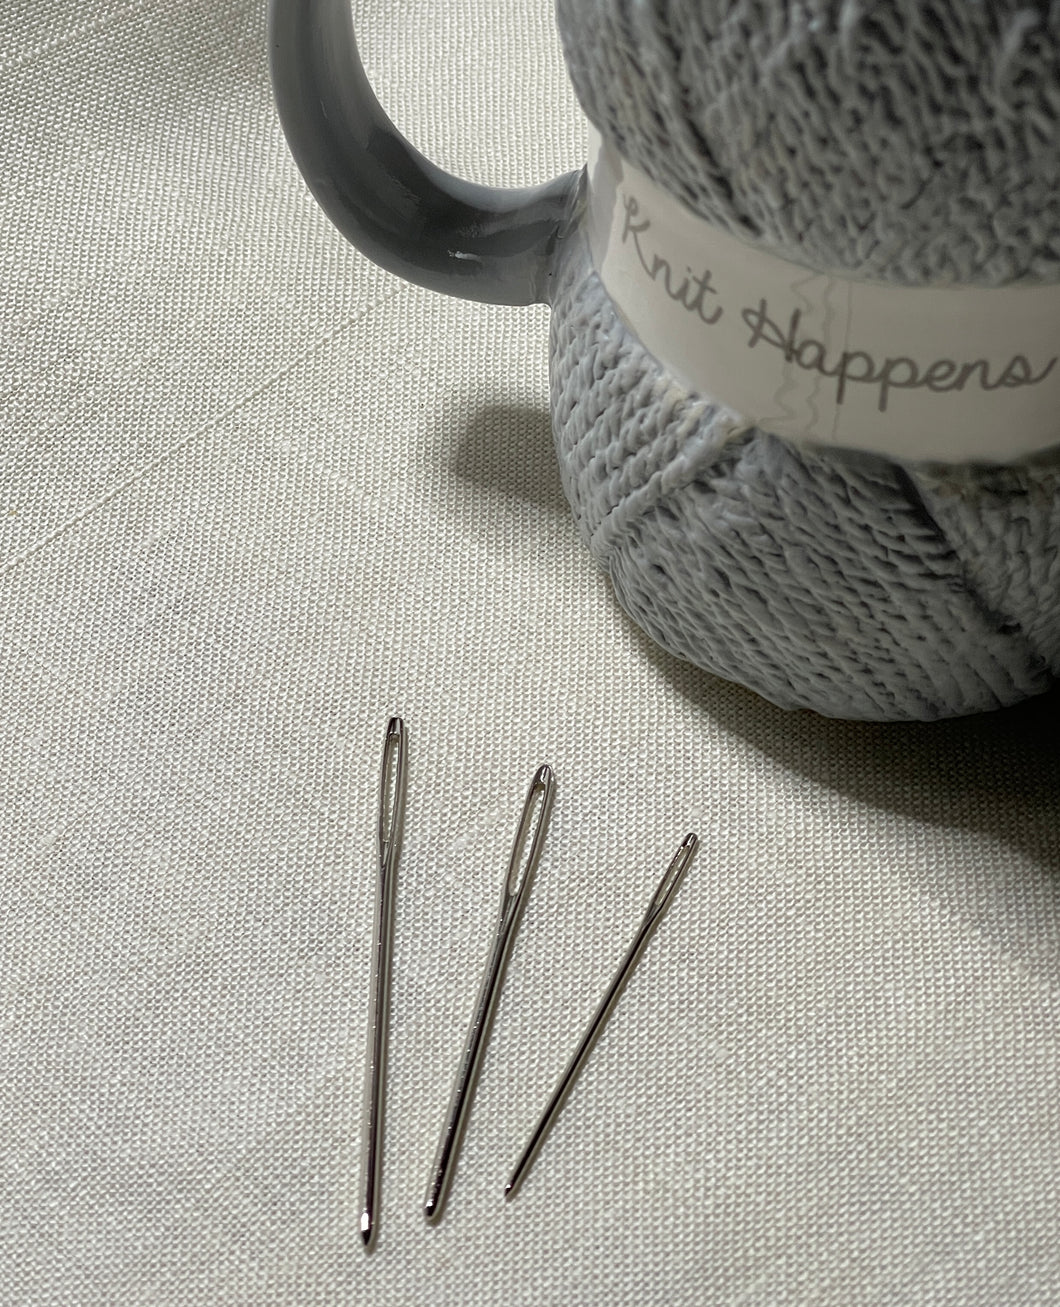 Sewing Needles Set of 3